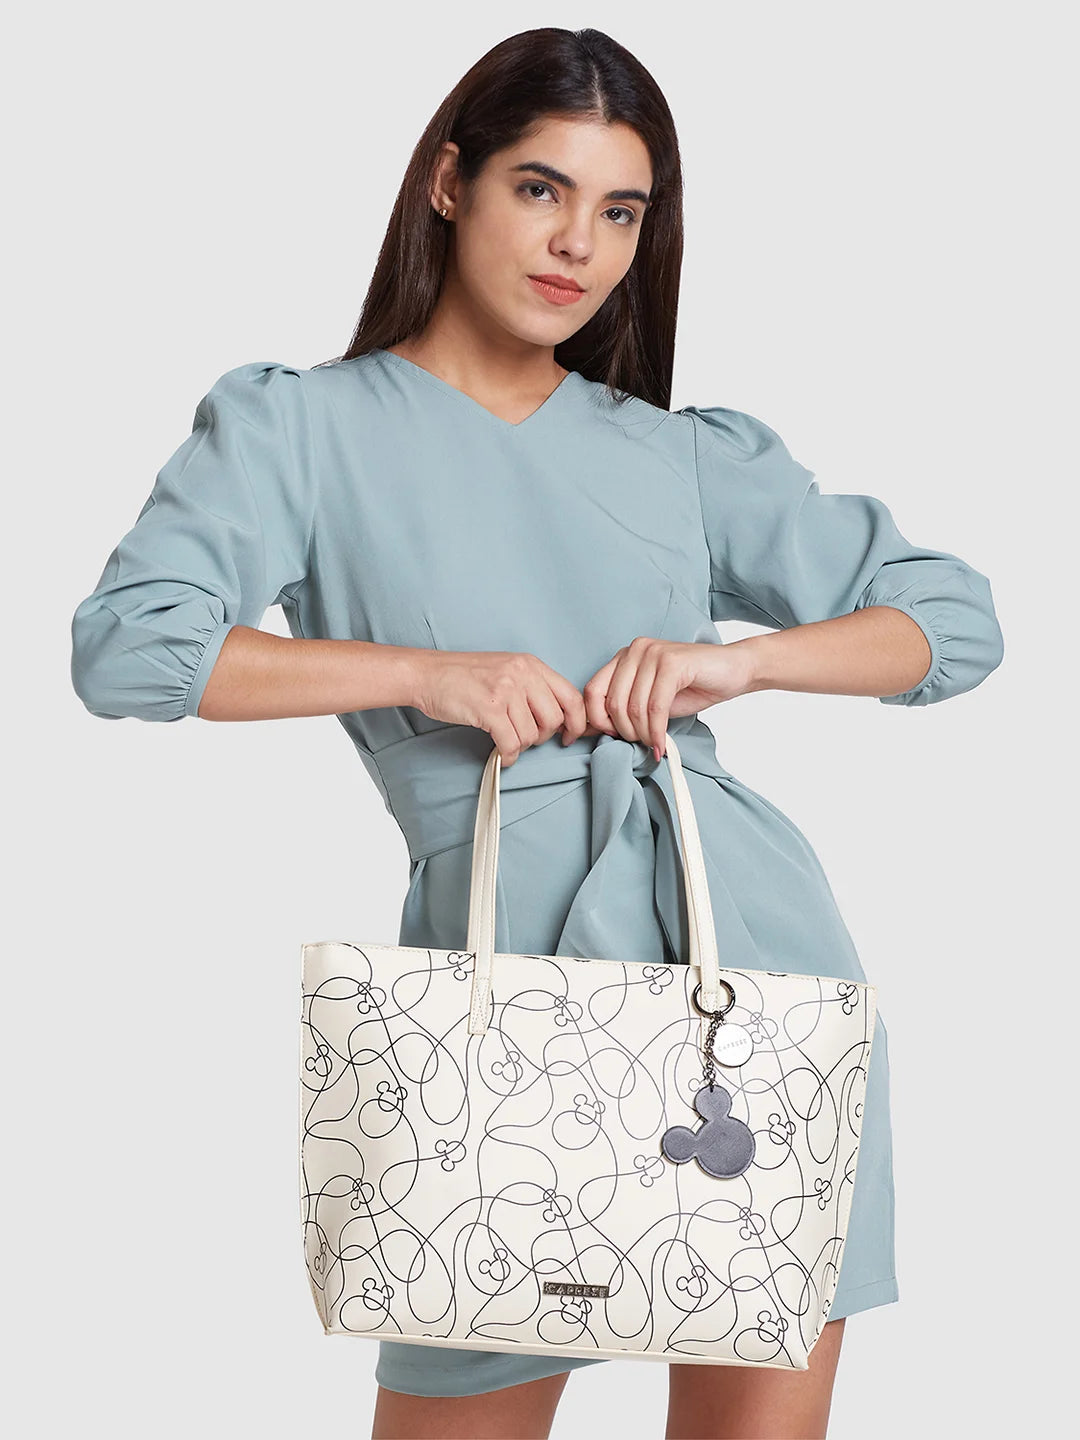 Disney Princess Lady Mickey Mouse Handbag Women Messenger Bag